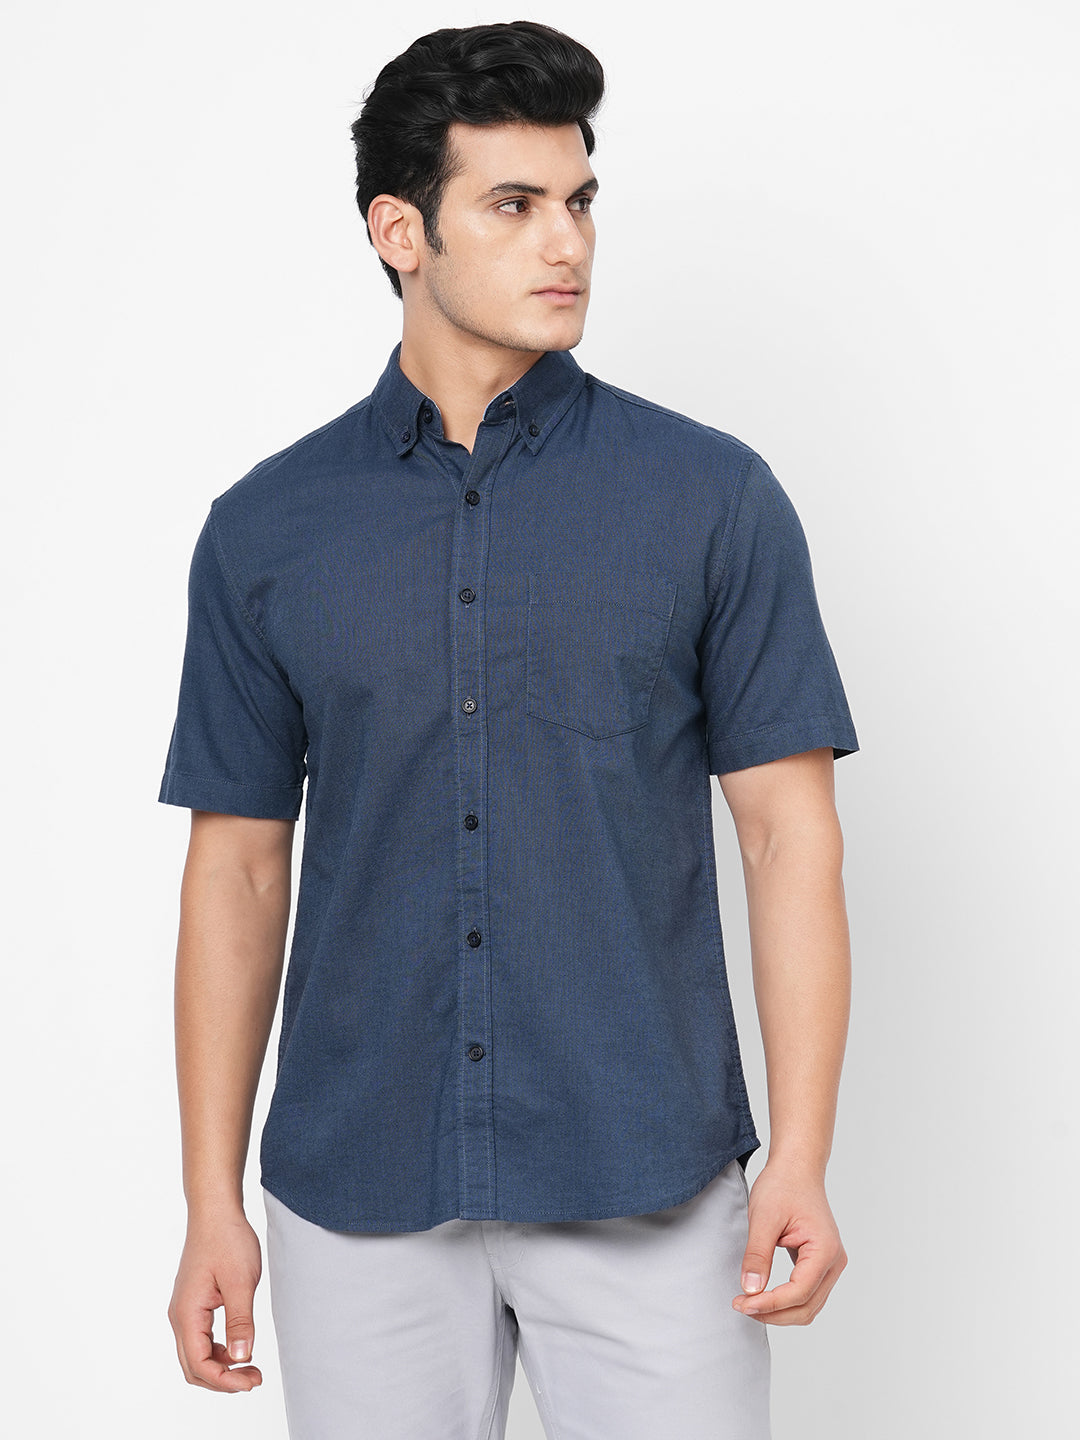 Men's Navy Oxford Cotton Regular Fit Shirts